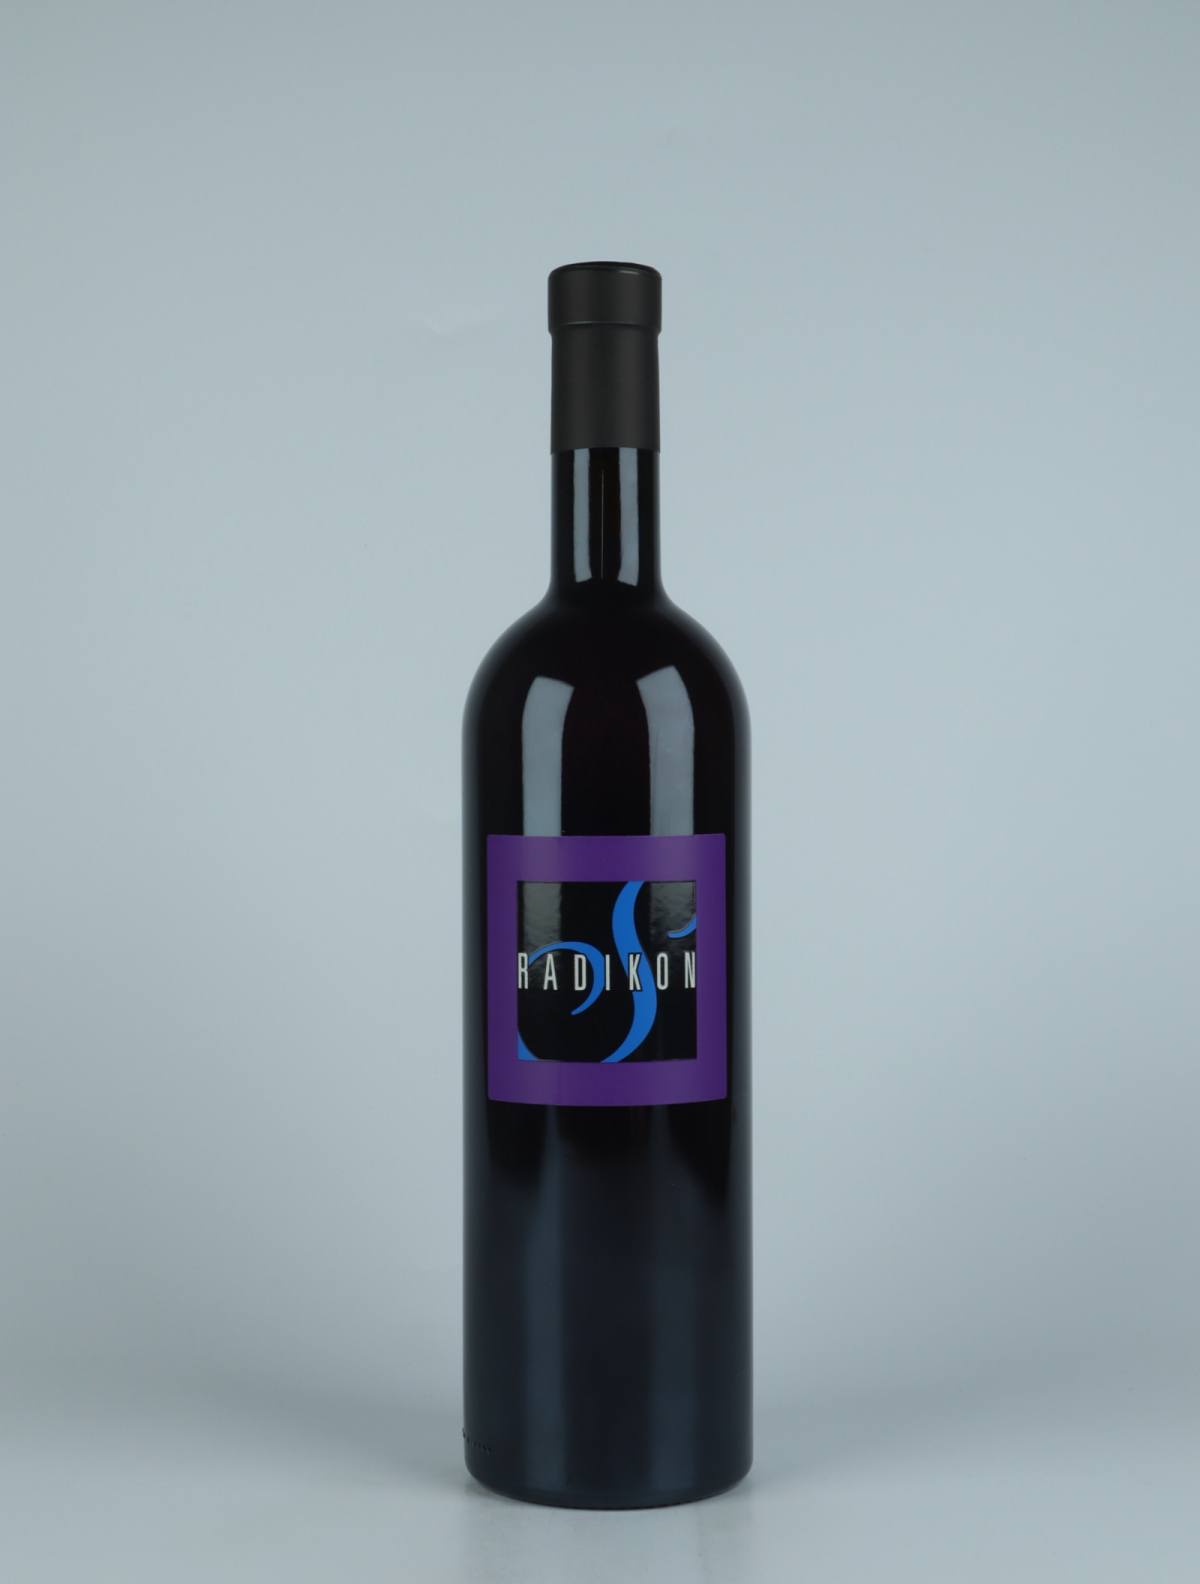 A bottle 2020 Sivi Orange wine from Radikon, Friuli in Italy